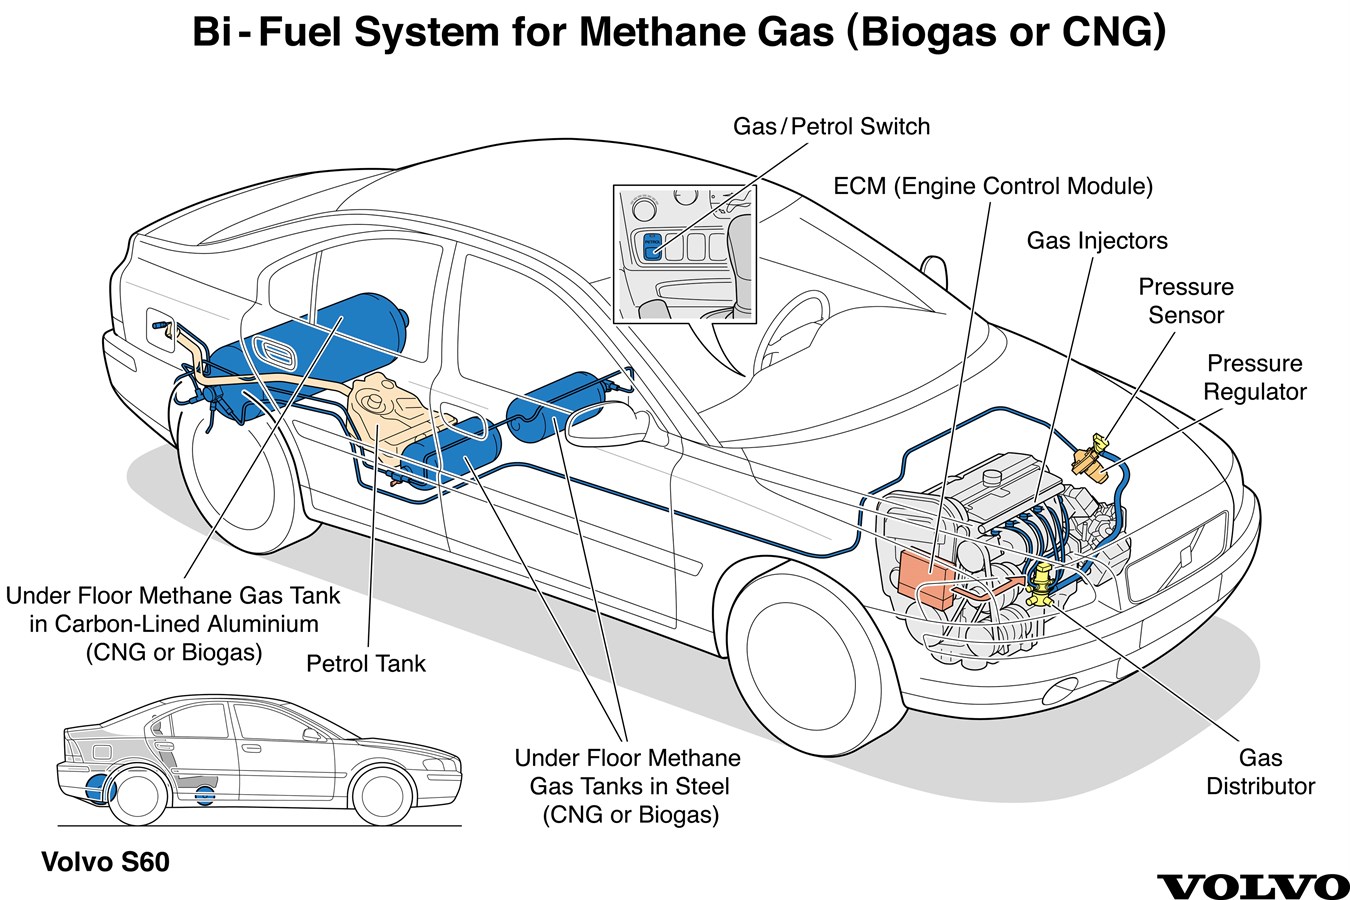 Volvo S60 Bi-Fuel Technical Illustration